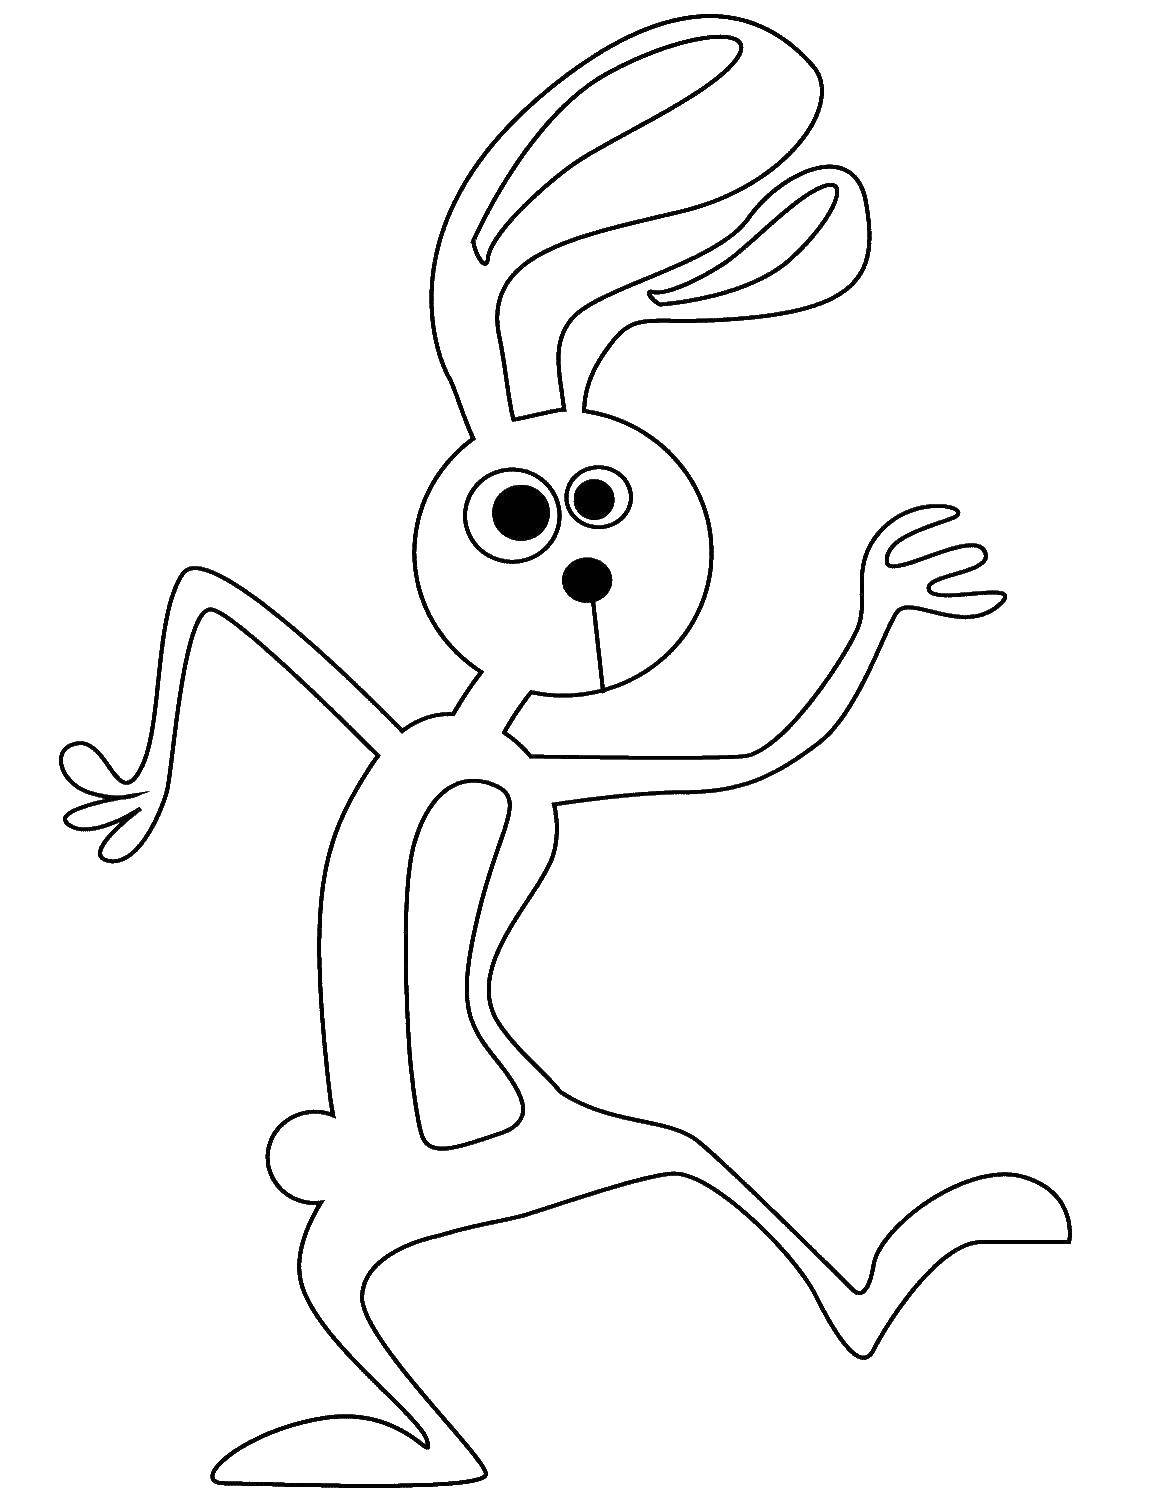 Coloring Cartoon rabbit. Category the rabbit. Tags:  rabbit dance.